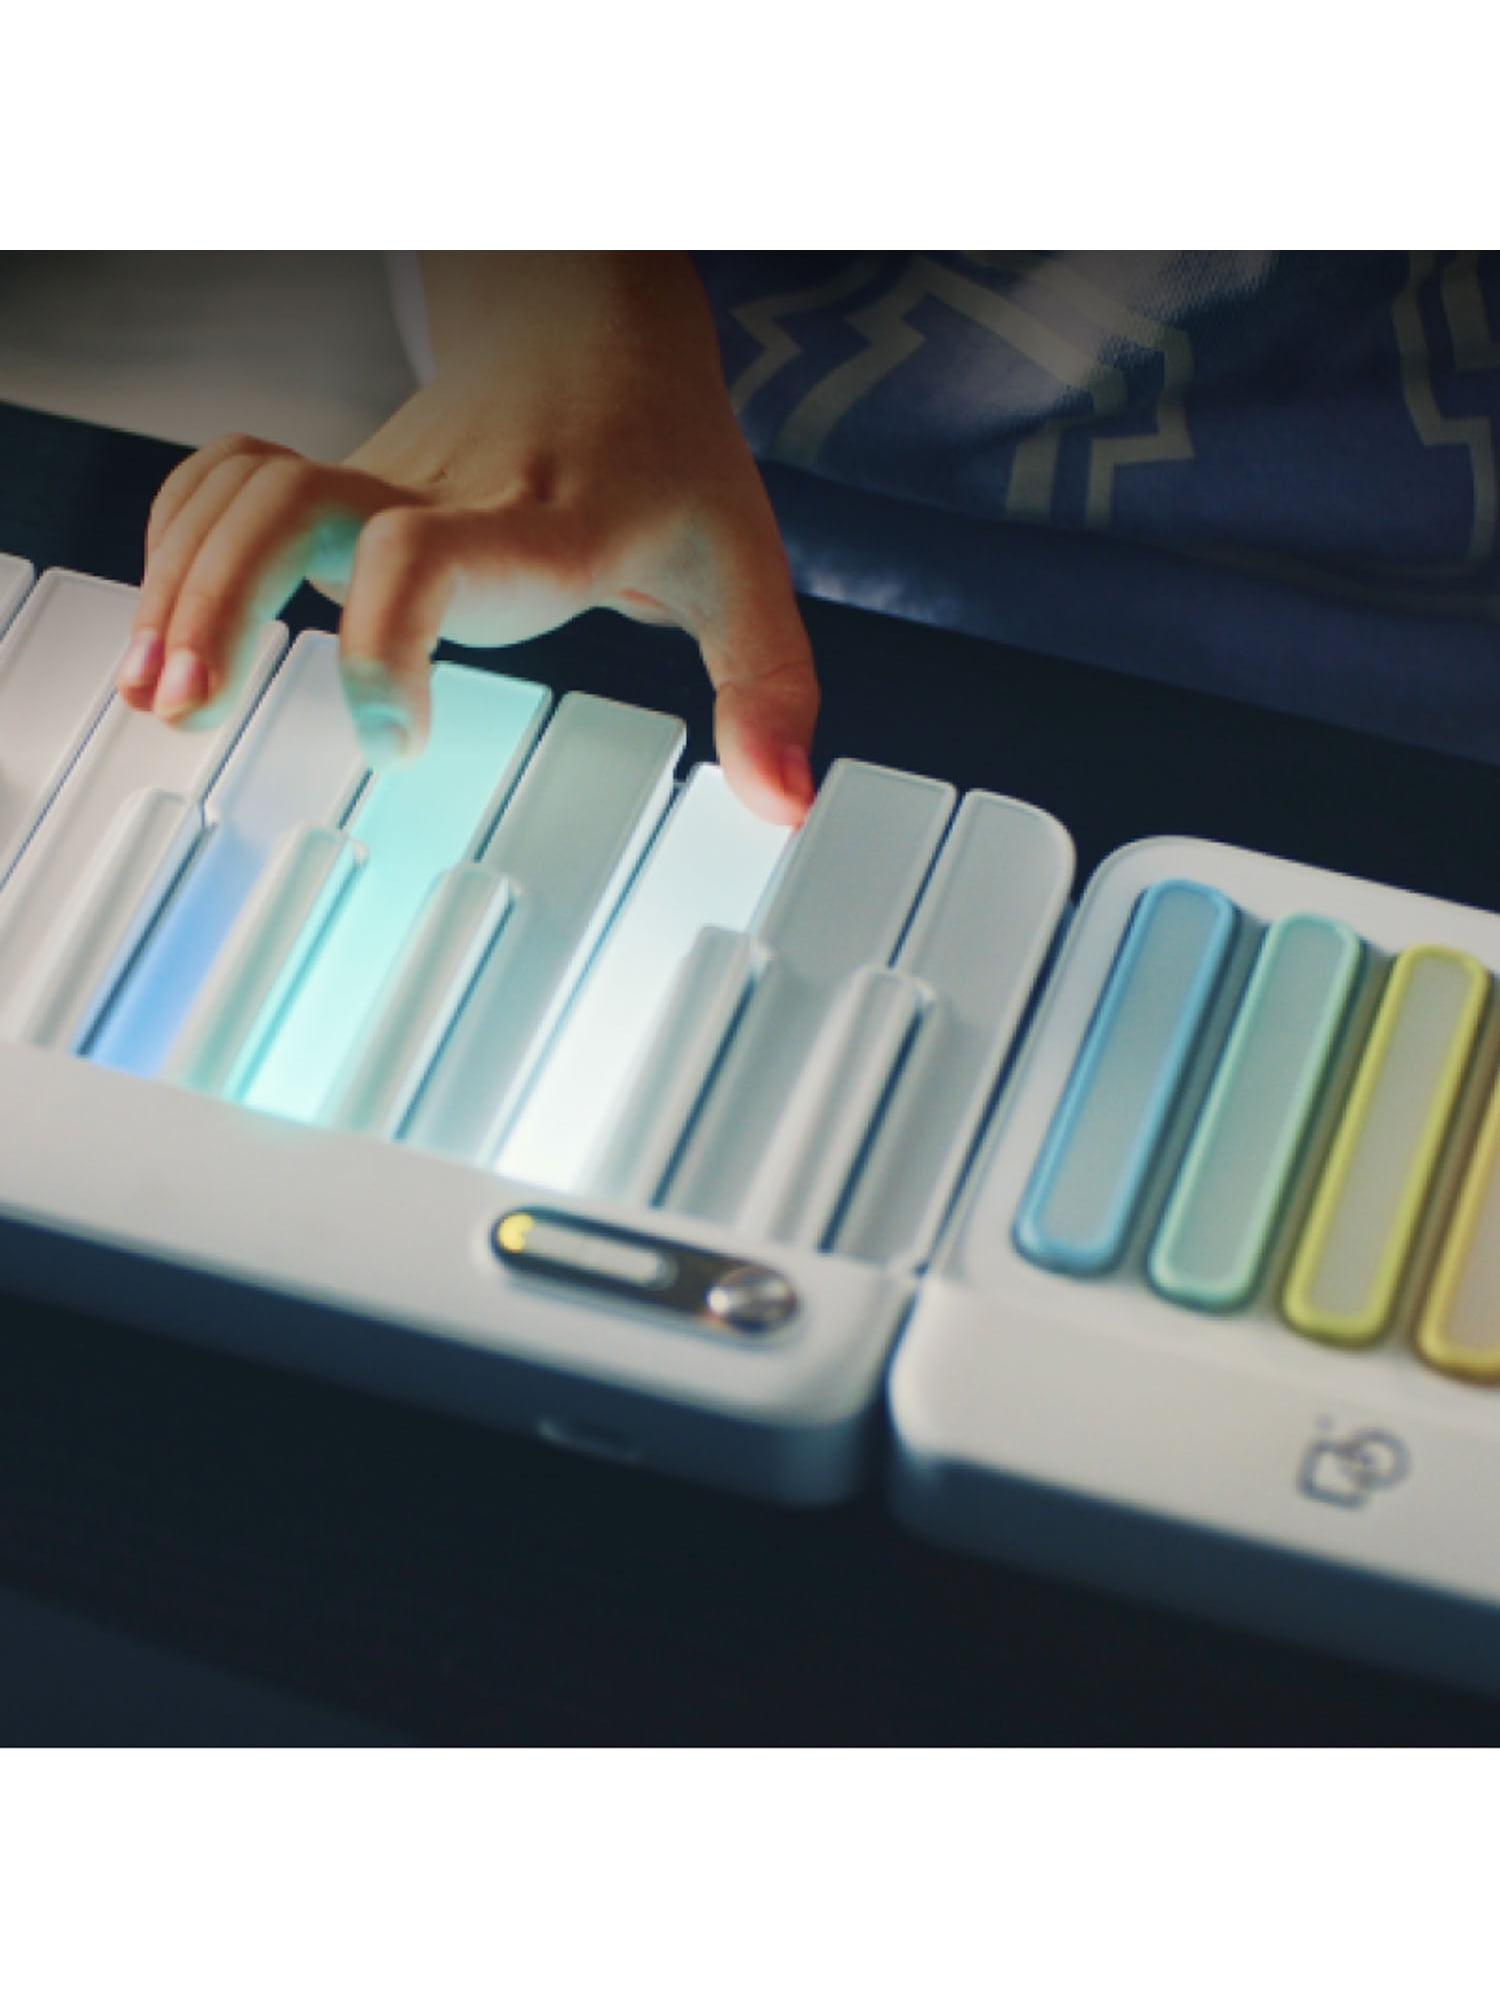 PopuPiano Portable Smart Piano midi Keyboard Controller with